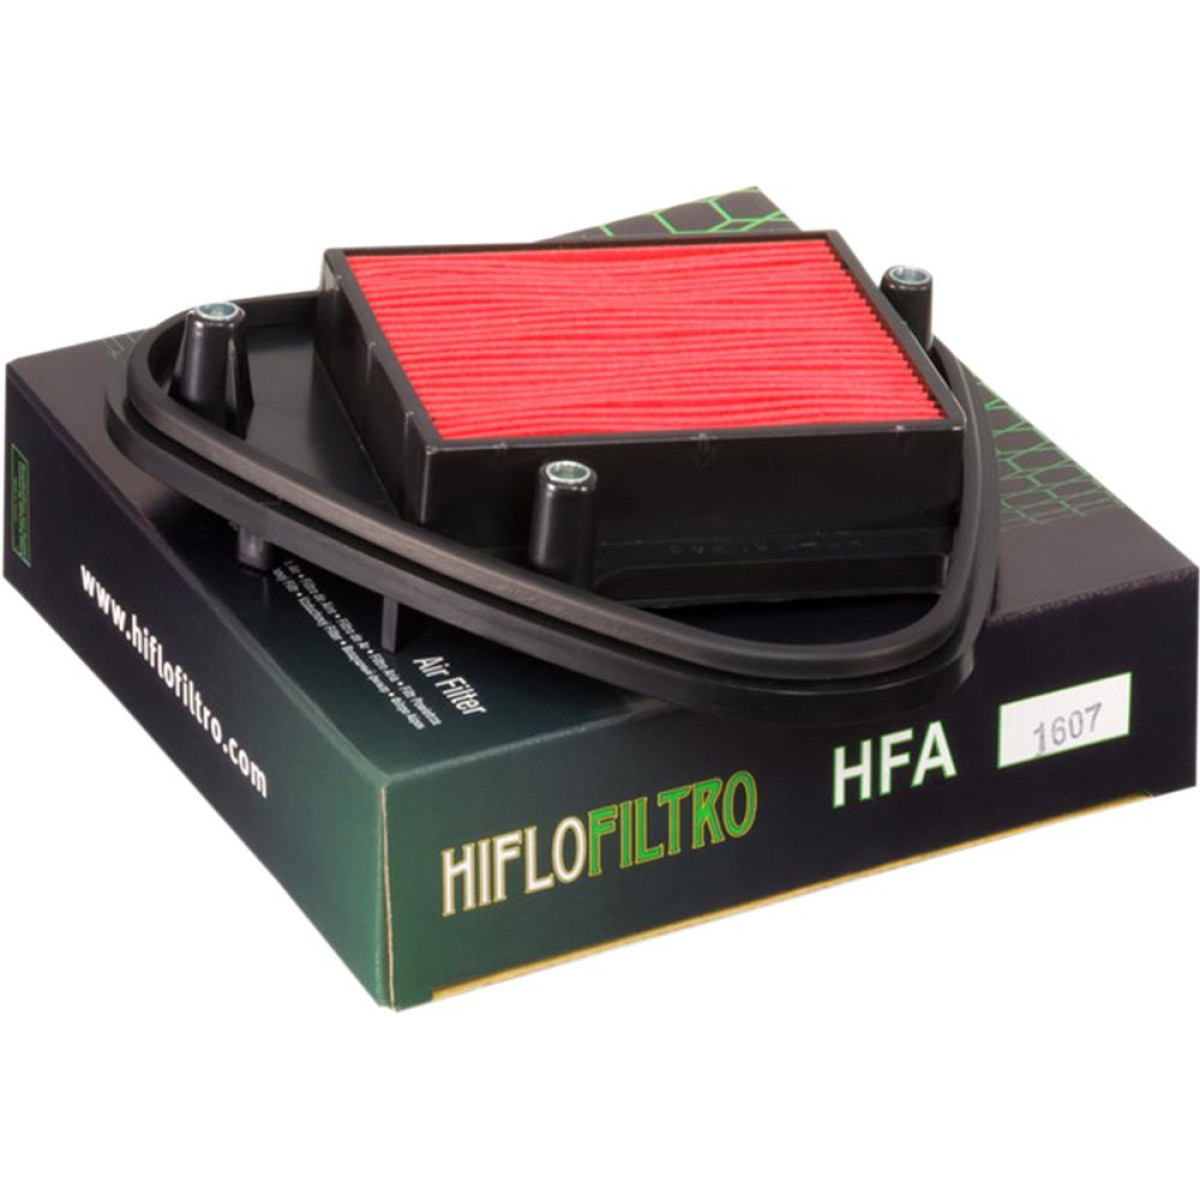 FILTRO AIRE HIFLOFILTRO HFA1607 HONDA NV400 / HONDA VT600 88/98